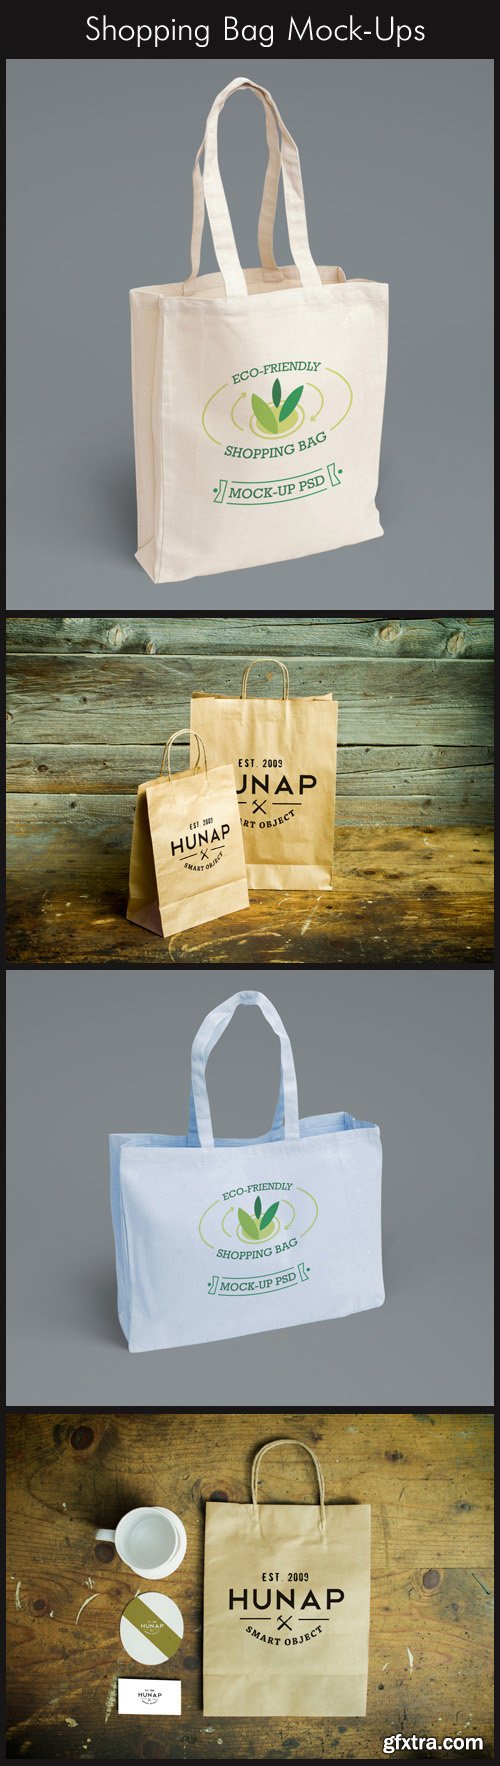 4 Shopping Bag Mock-Ups » GFxtra